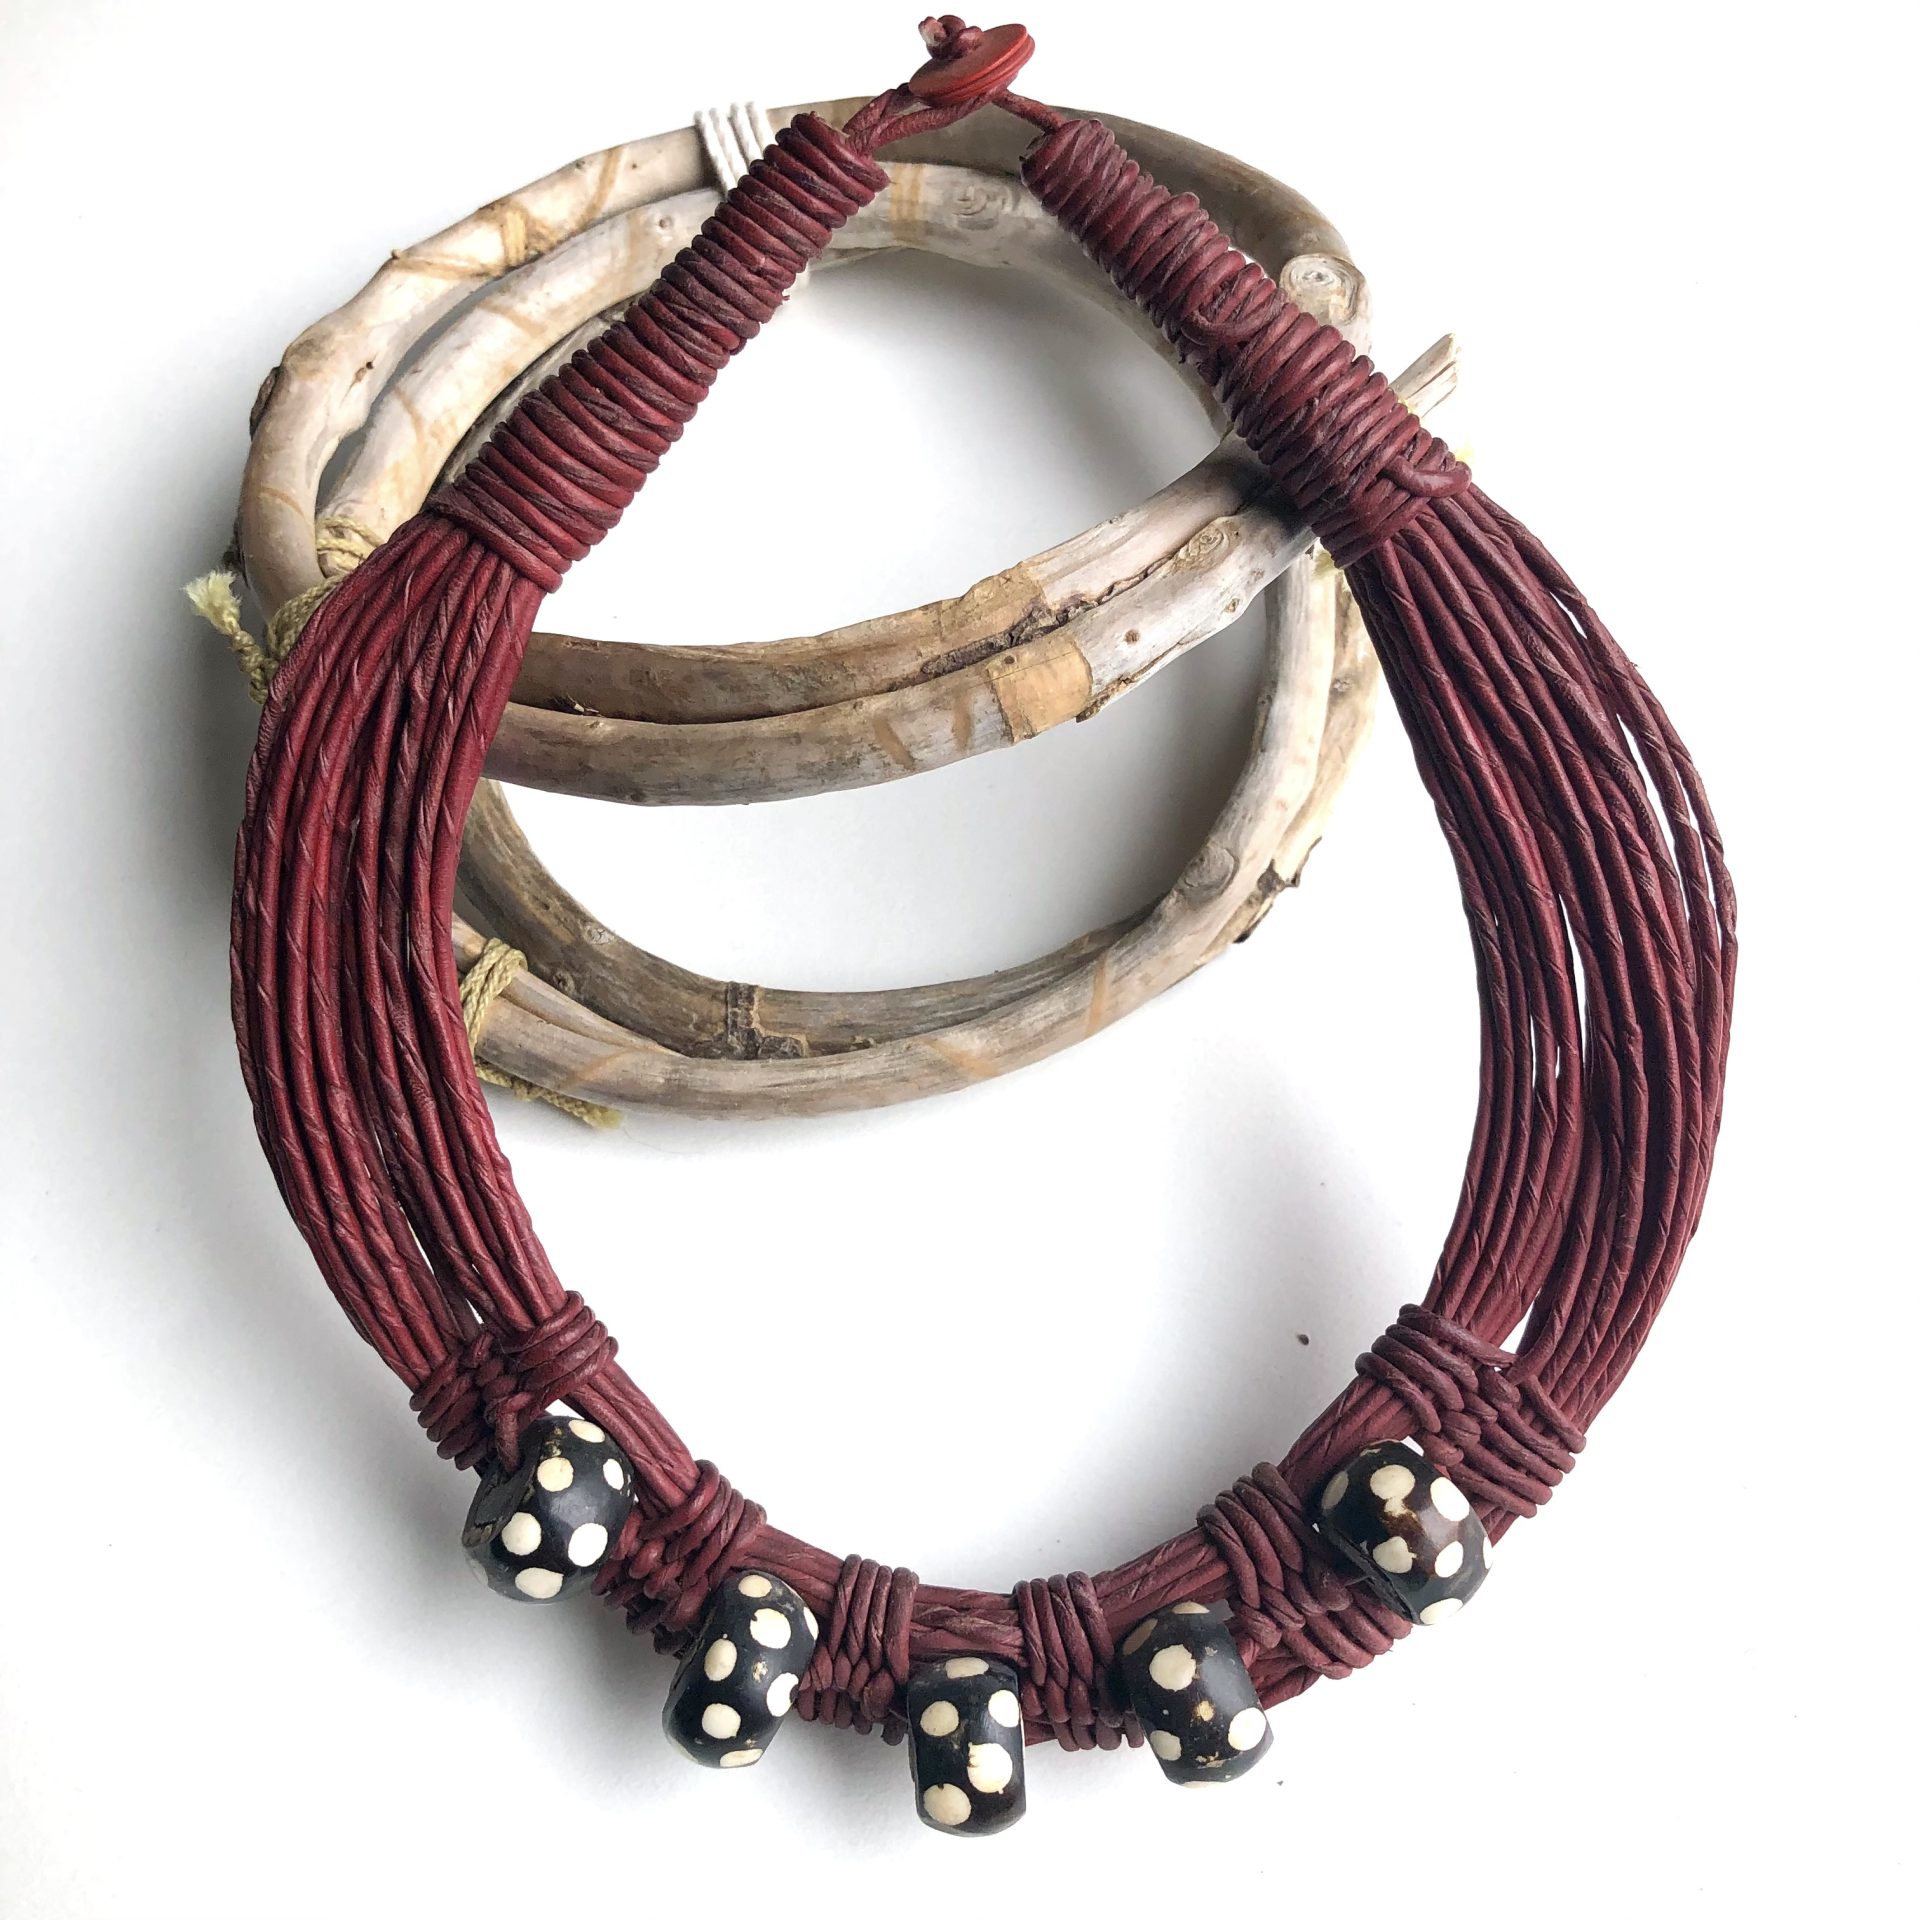 Batik Bone and Leather Necklace